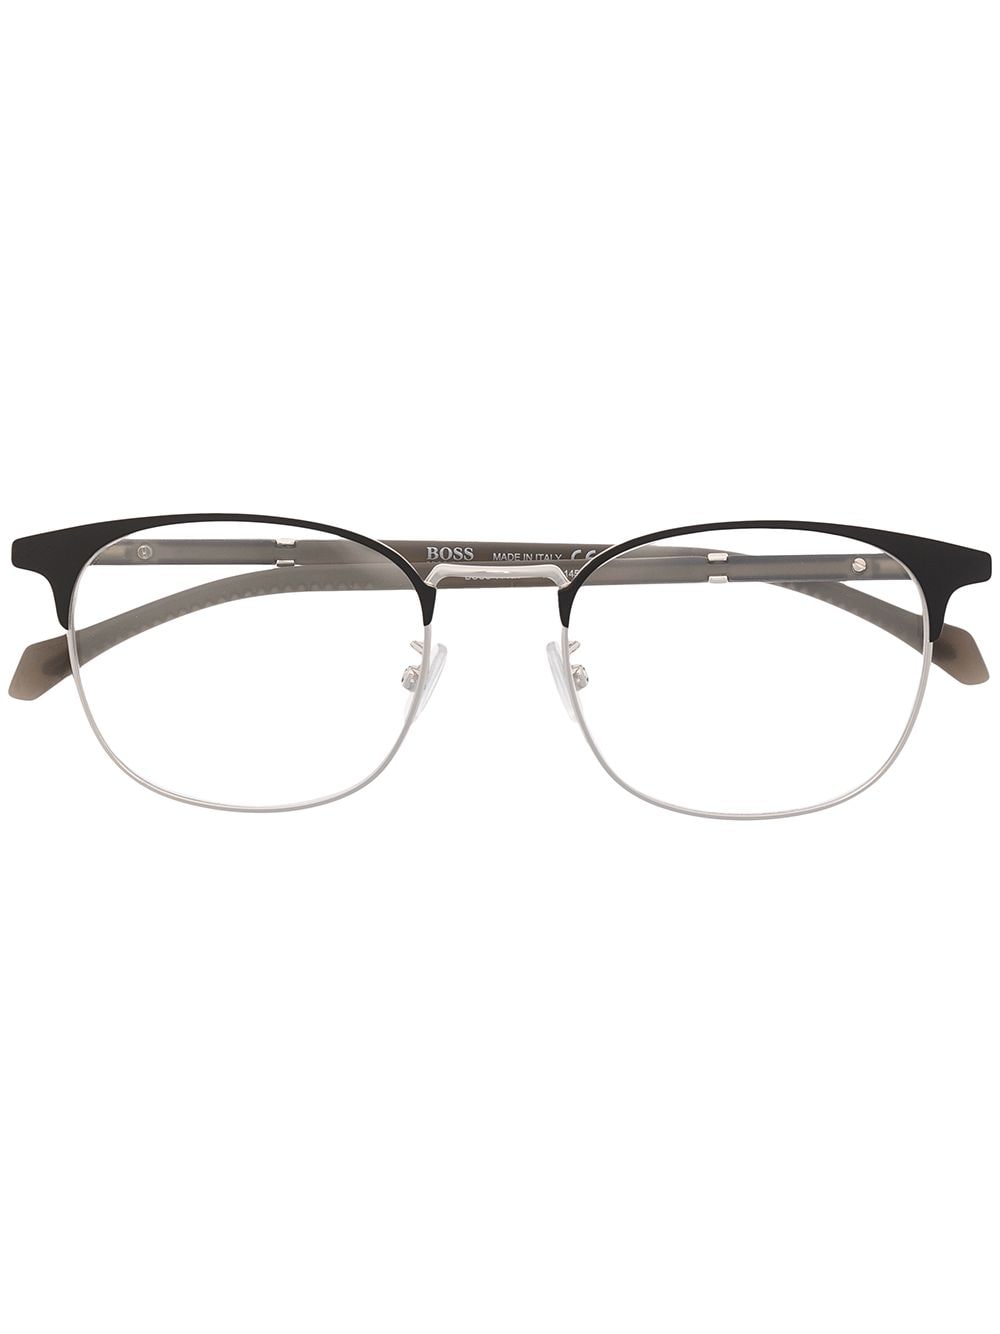 BOSS round frame glasses - Grey von BOSS